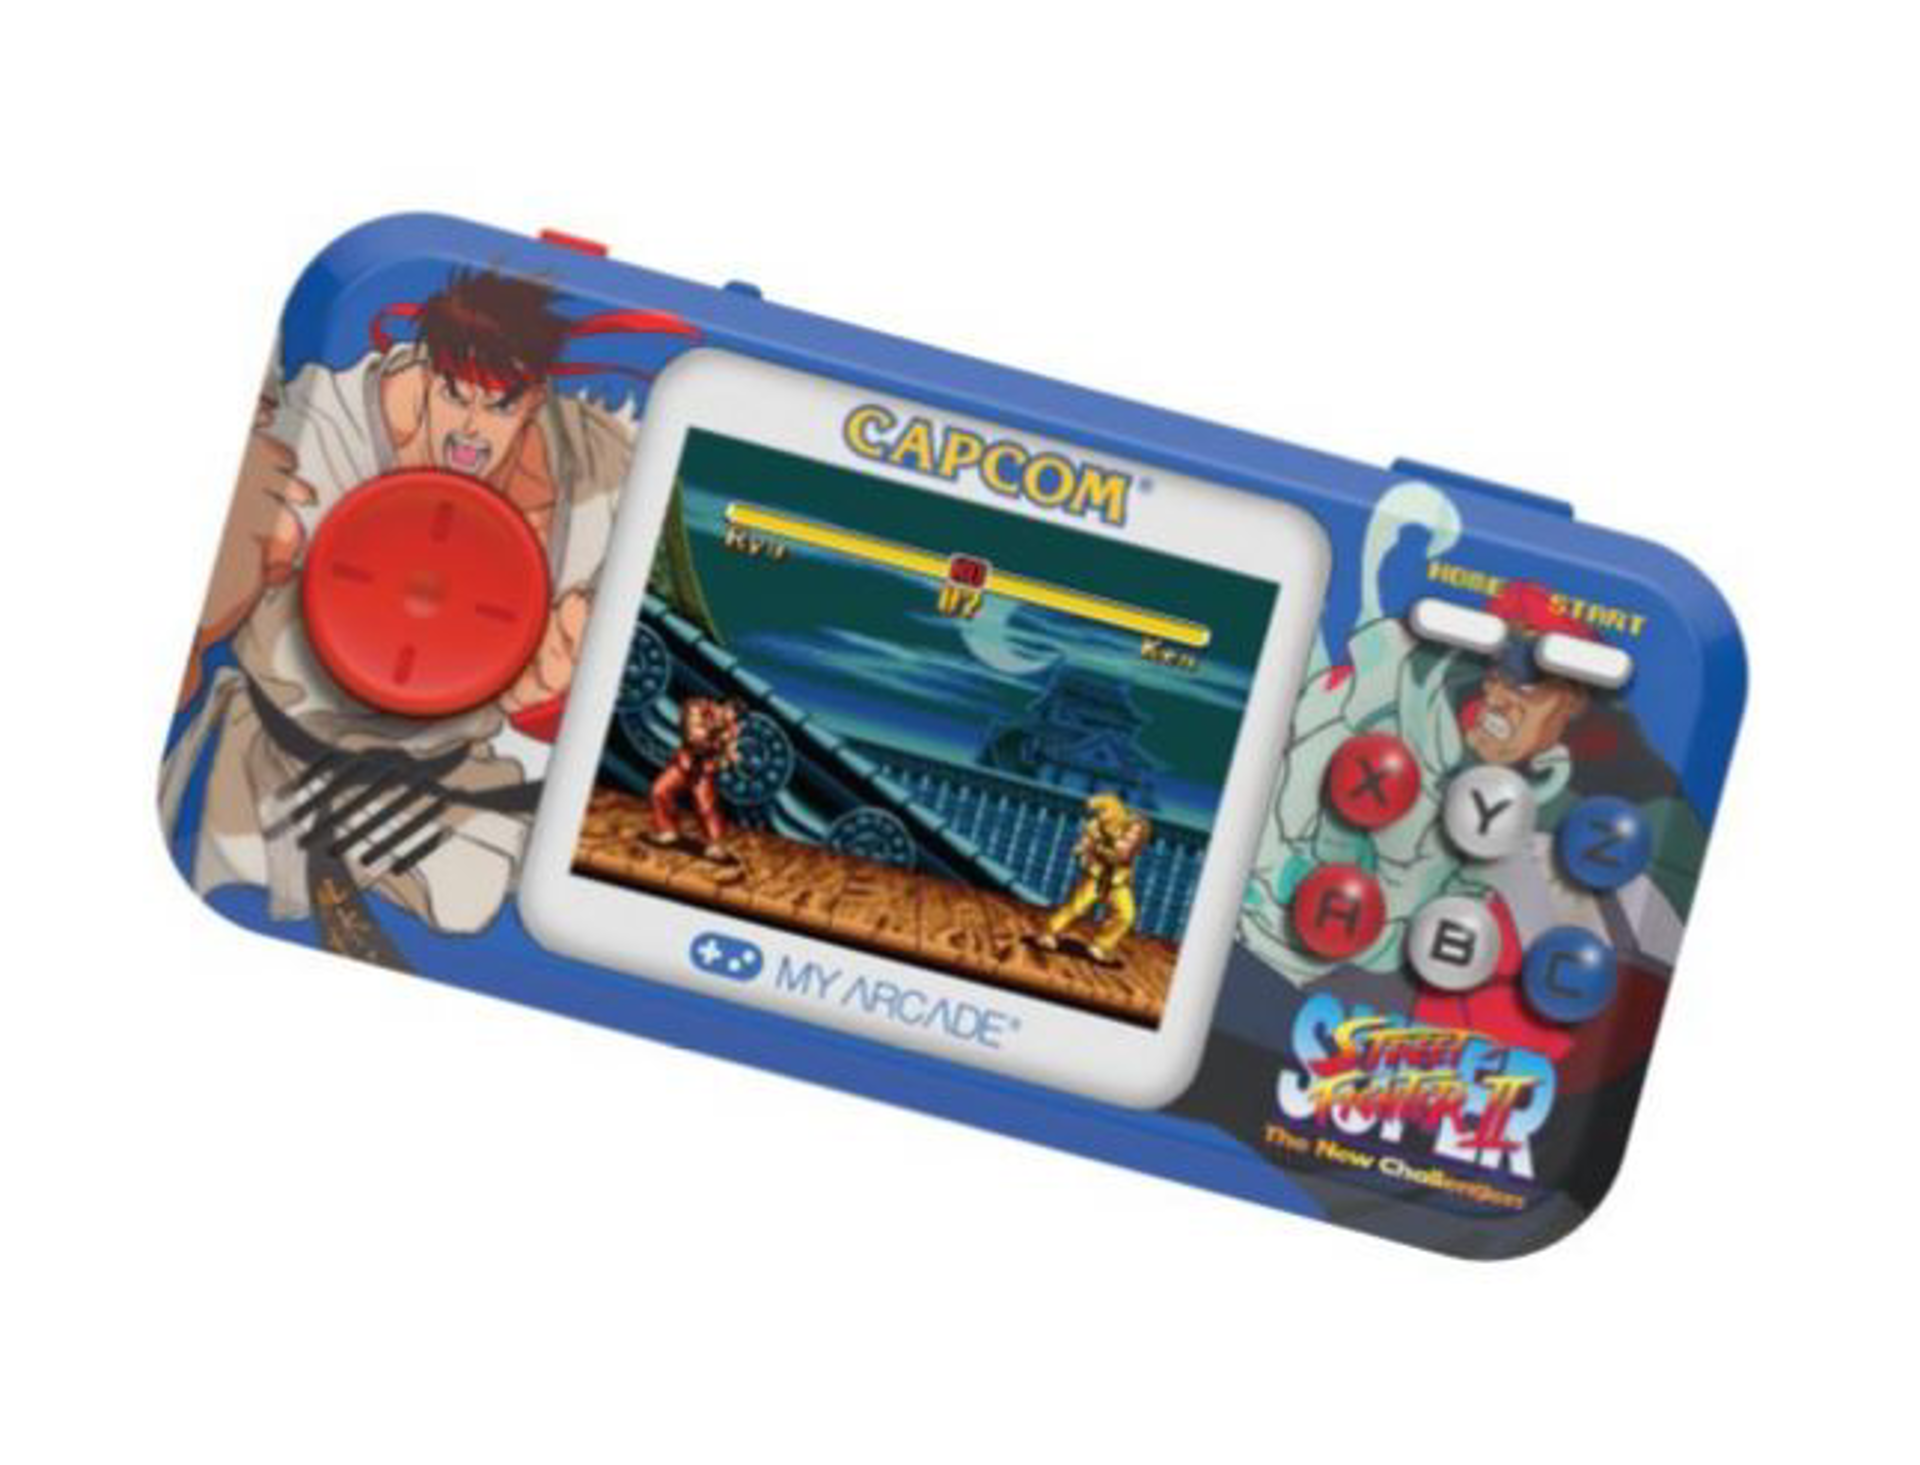 My Arcade - Pocket Player Pro Super Street Fighter II (2 Jeux en 1)